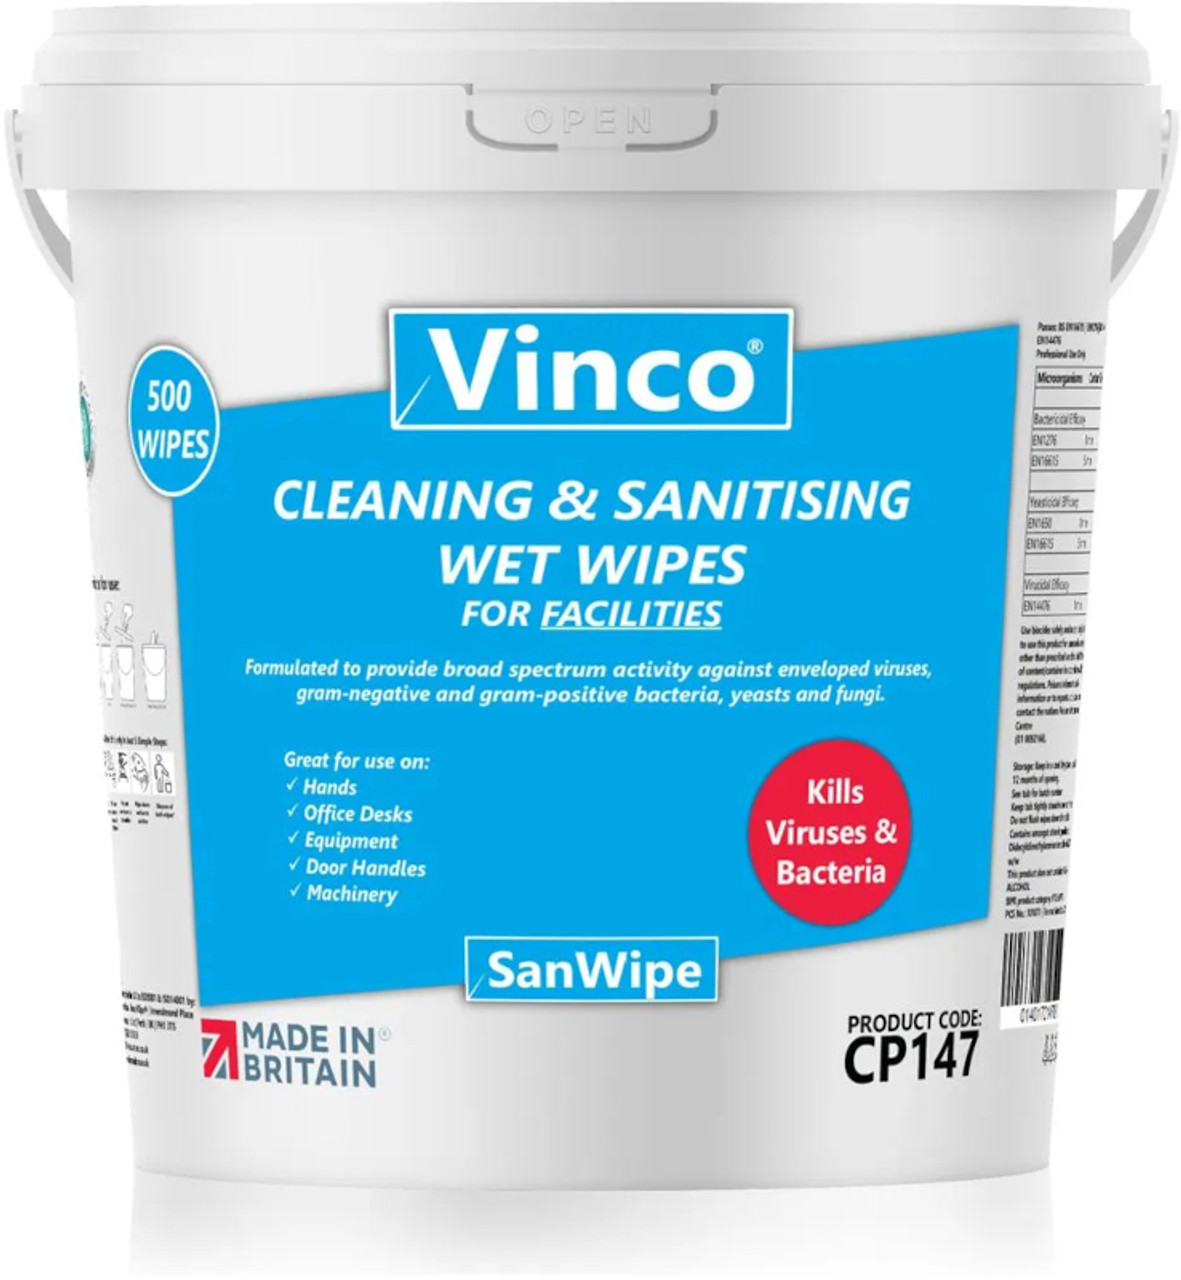 Vinco-SanWipe Facilities Sanitising Wipe - 500 Wipes - CP147